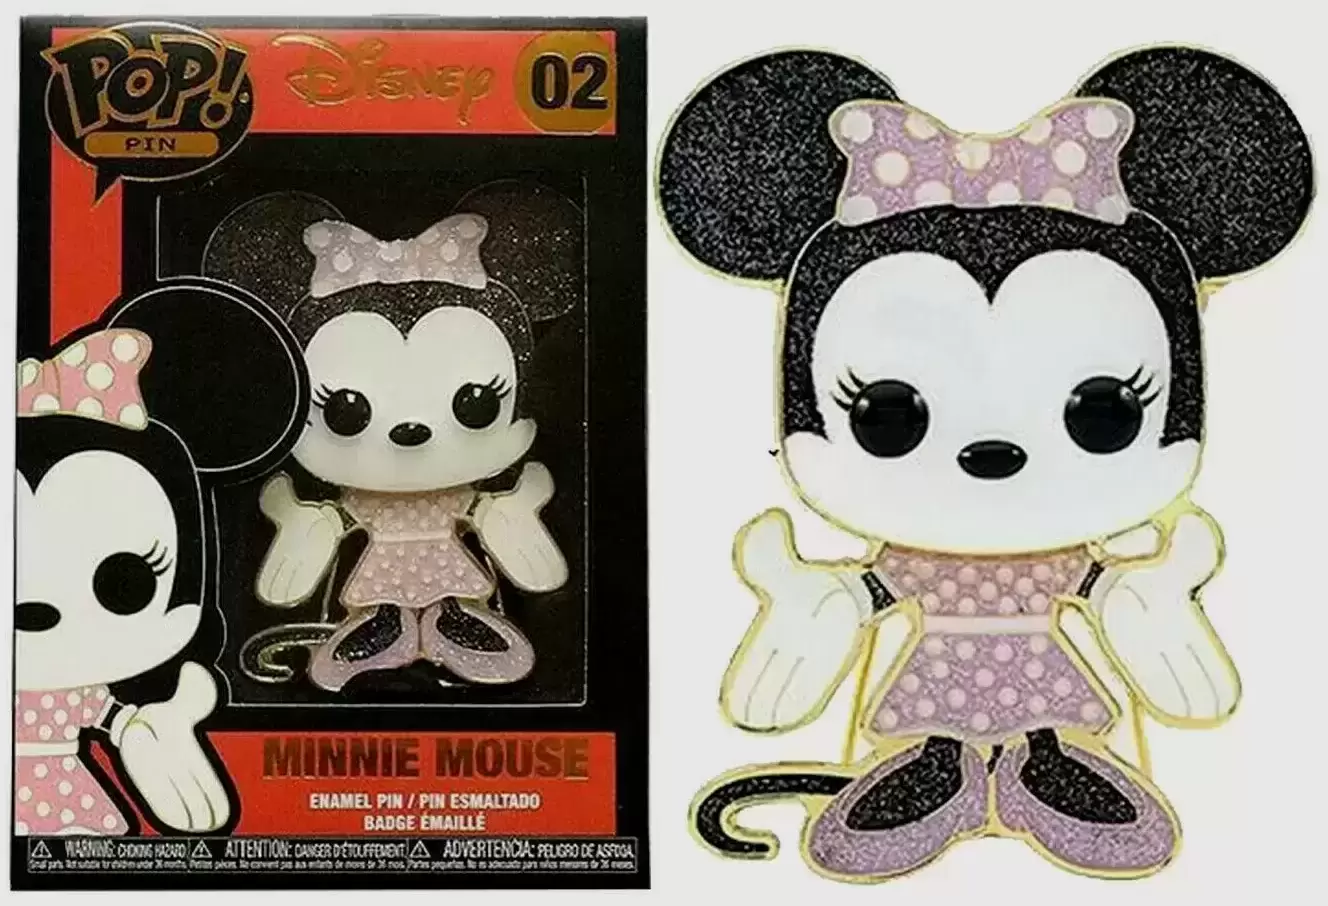 POP! Pin Disney - Minnie Mouse